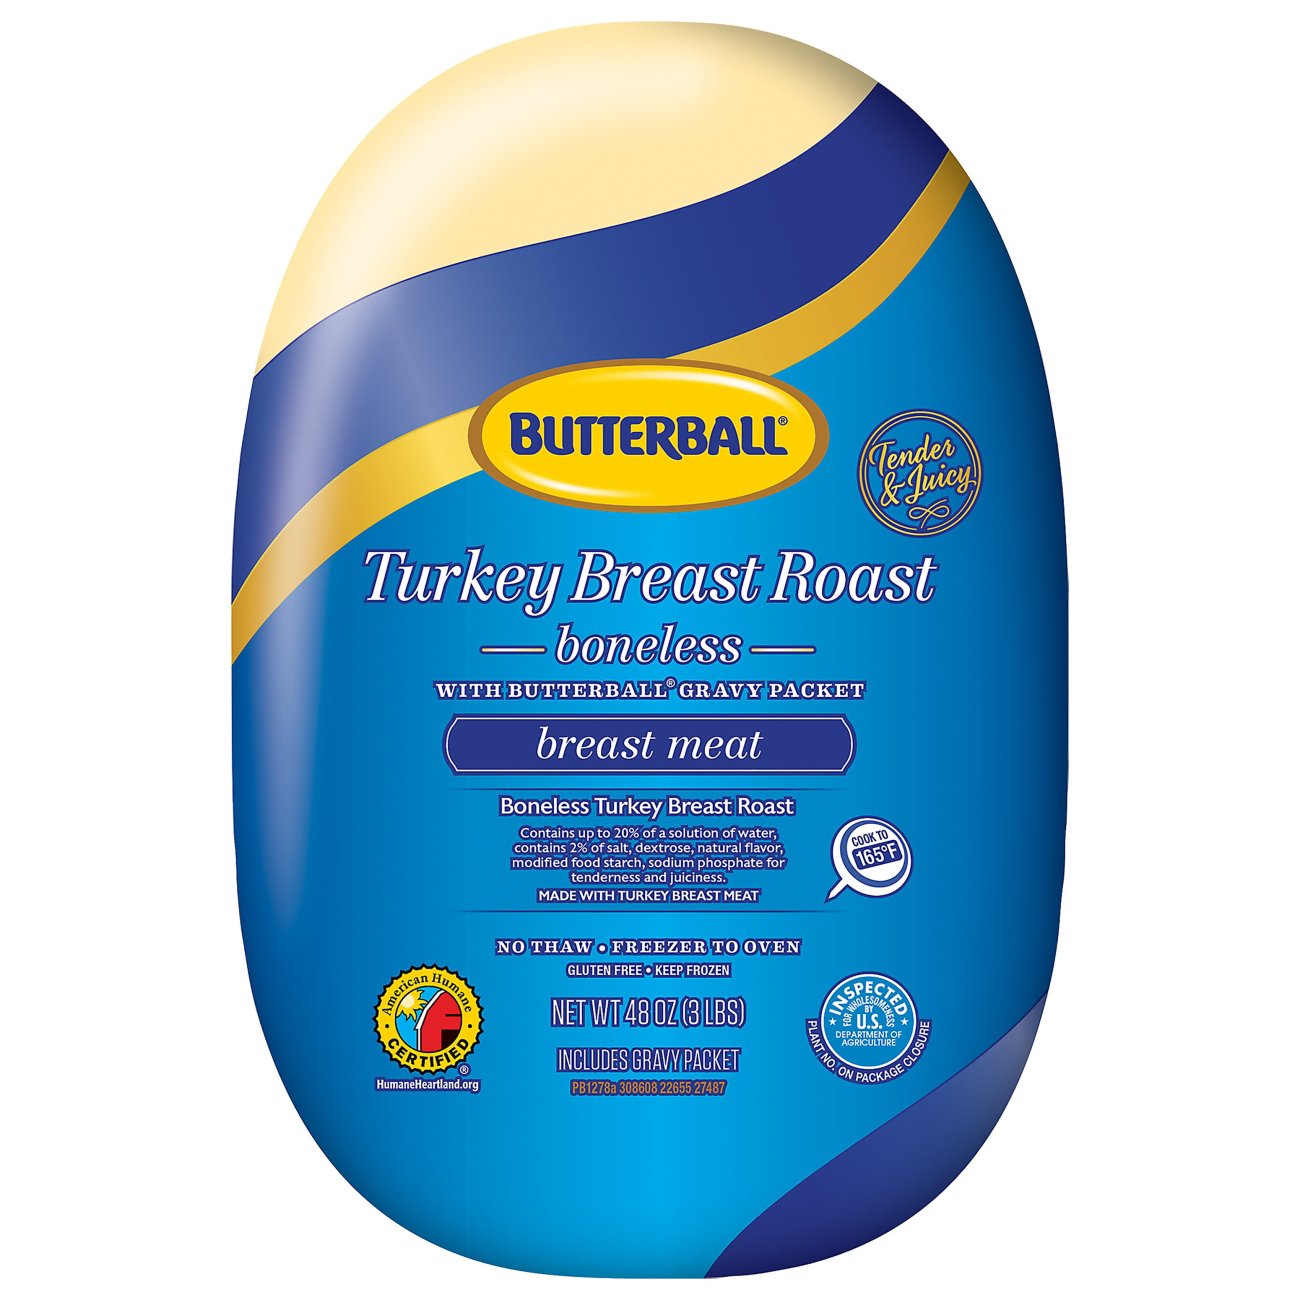 Butterball Frozen Boneless Turkey Breast Roast Shop Turkey At H E B,How To Make Rotel Dip